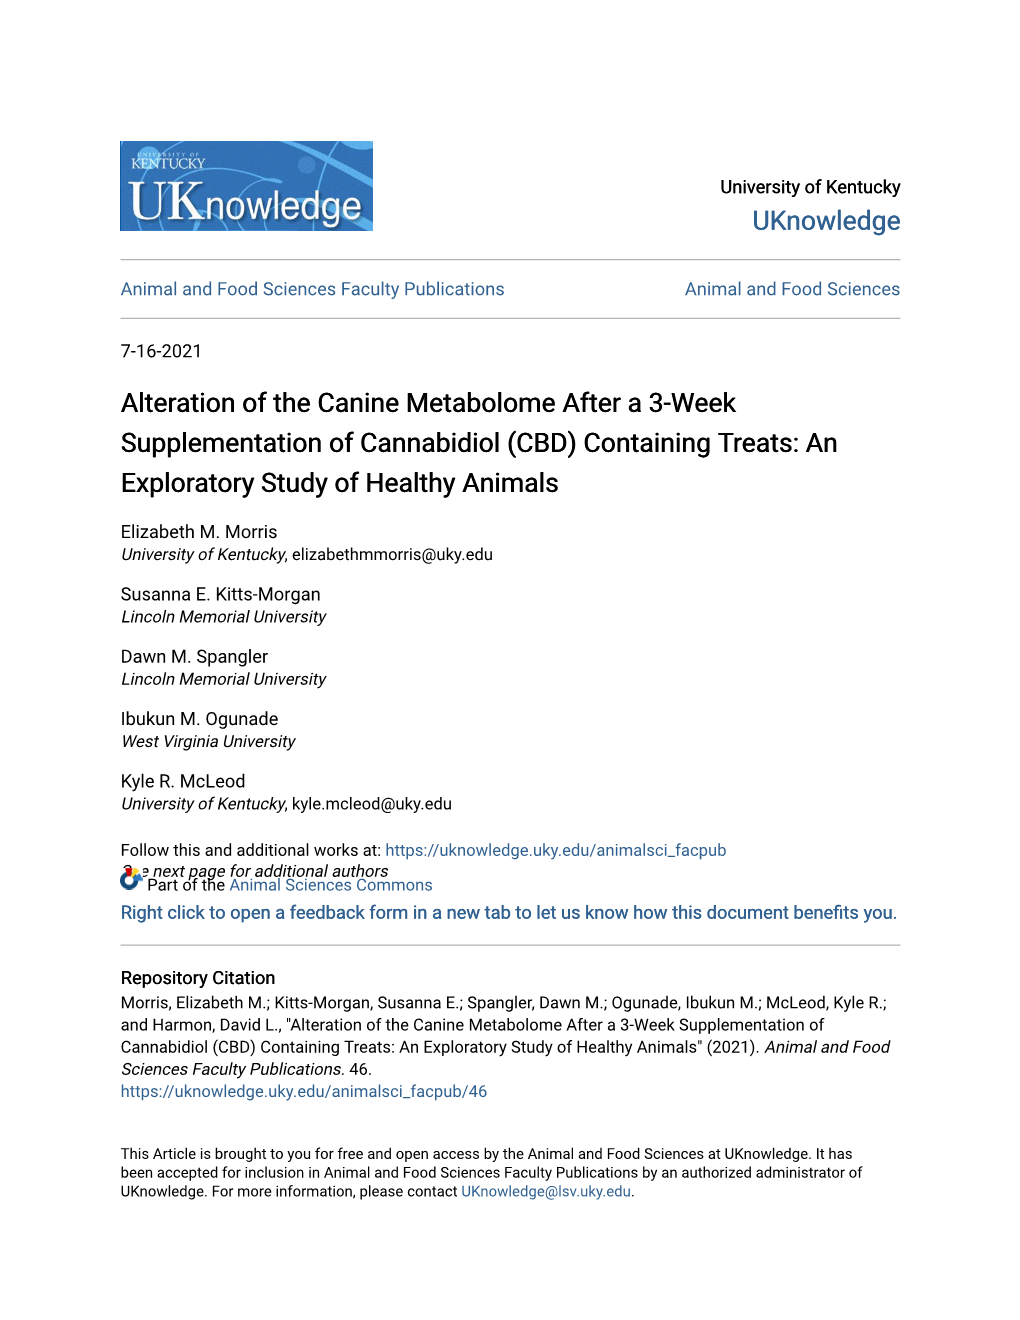 CBD) Containing Treats: an Exploratory Study of Healthy Animals